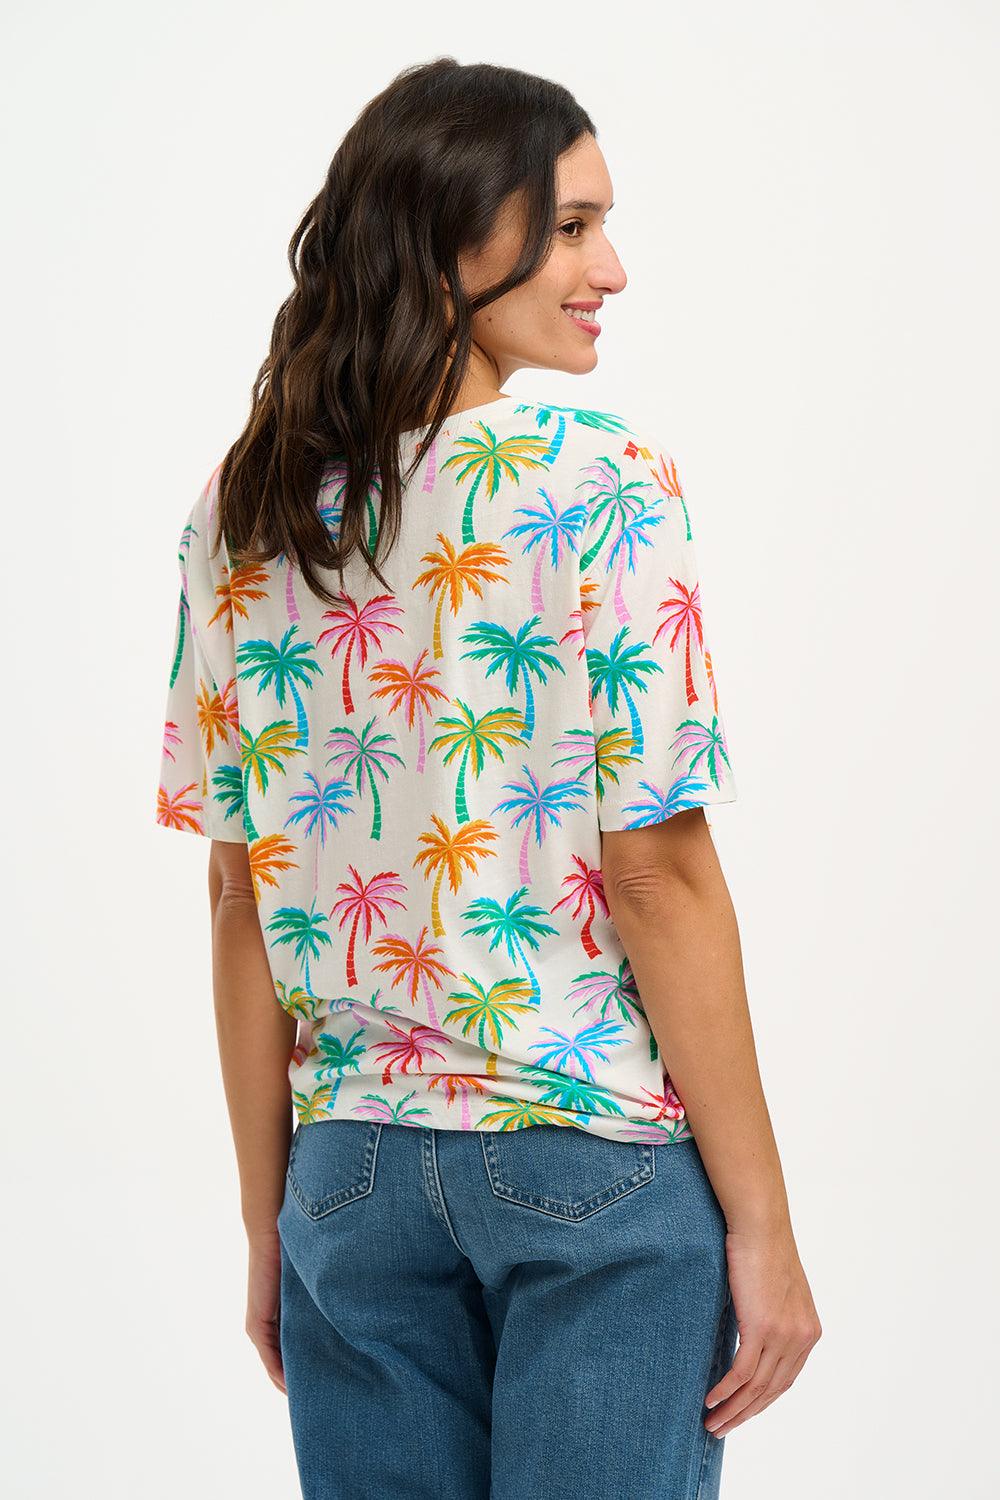 Camiseta Sugarhill Kinsley Relaxed Multi Rainbow Palms - ECRU